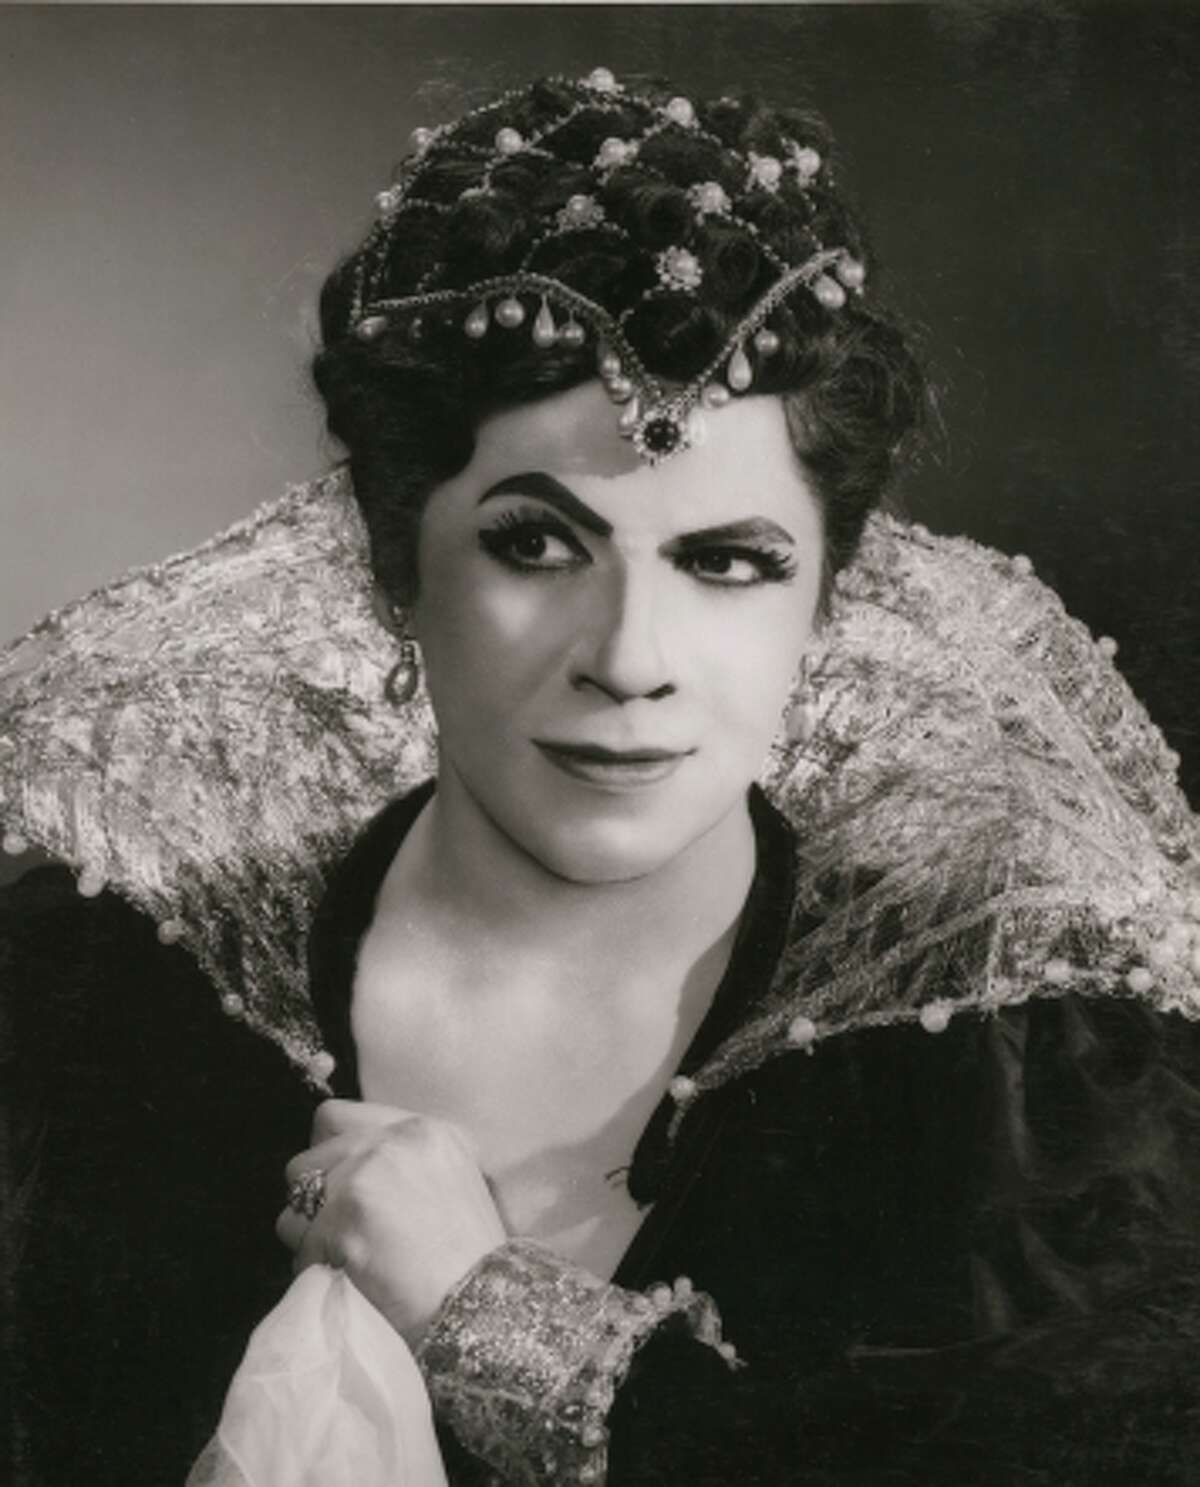 Mezzo-soprano Irene Dalis as Princess Eboli in Verdi’s “Don Carlos” at the Metropolitan Opera, 1957